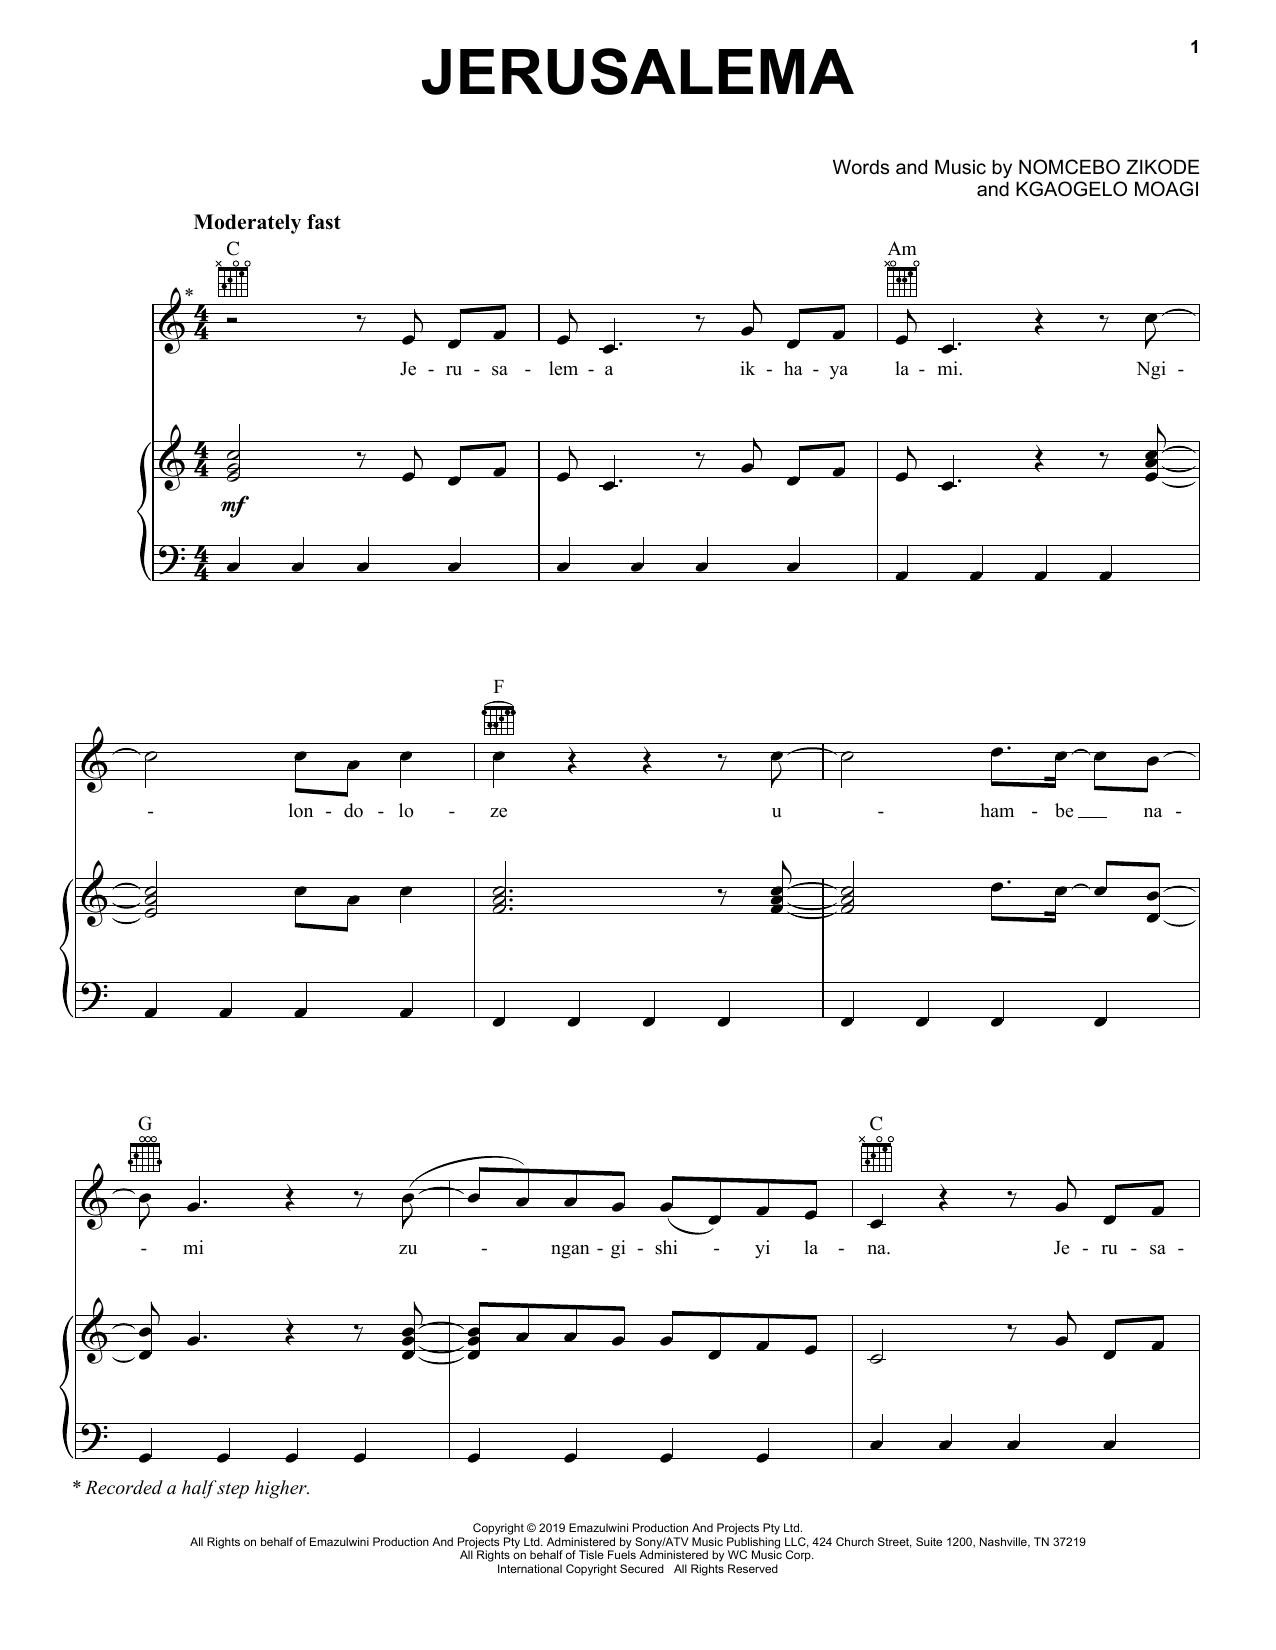 Master KG Jerusalema (feat. Nomcebo Zikode) Sheet Music Notes & Chords for Piano, Vocal & Guitar (Right-Hand Melody) - Download or Print PDF